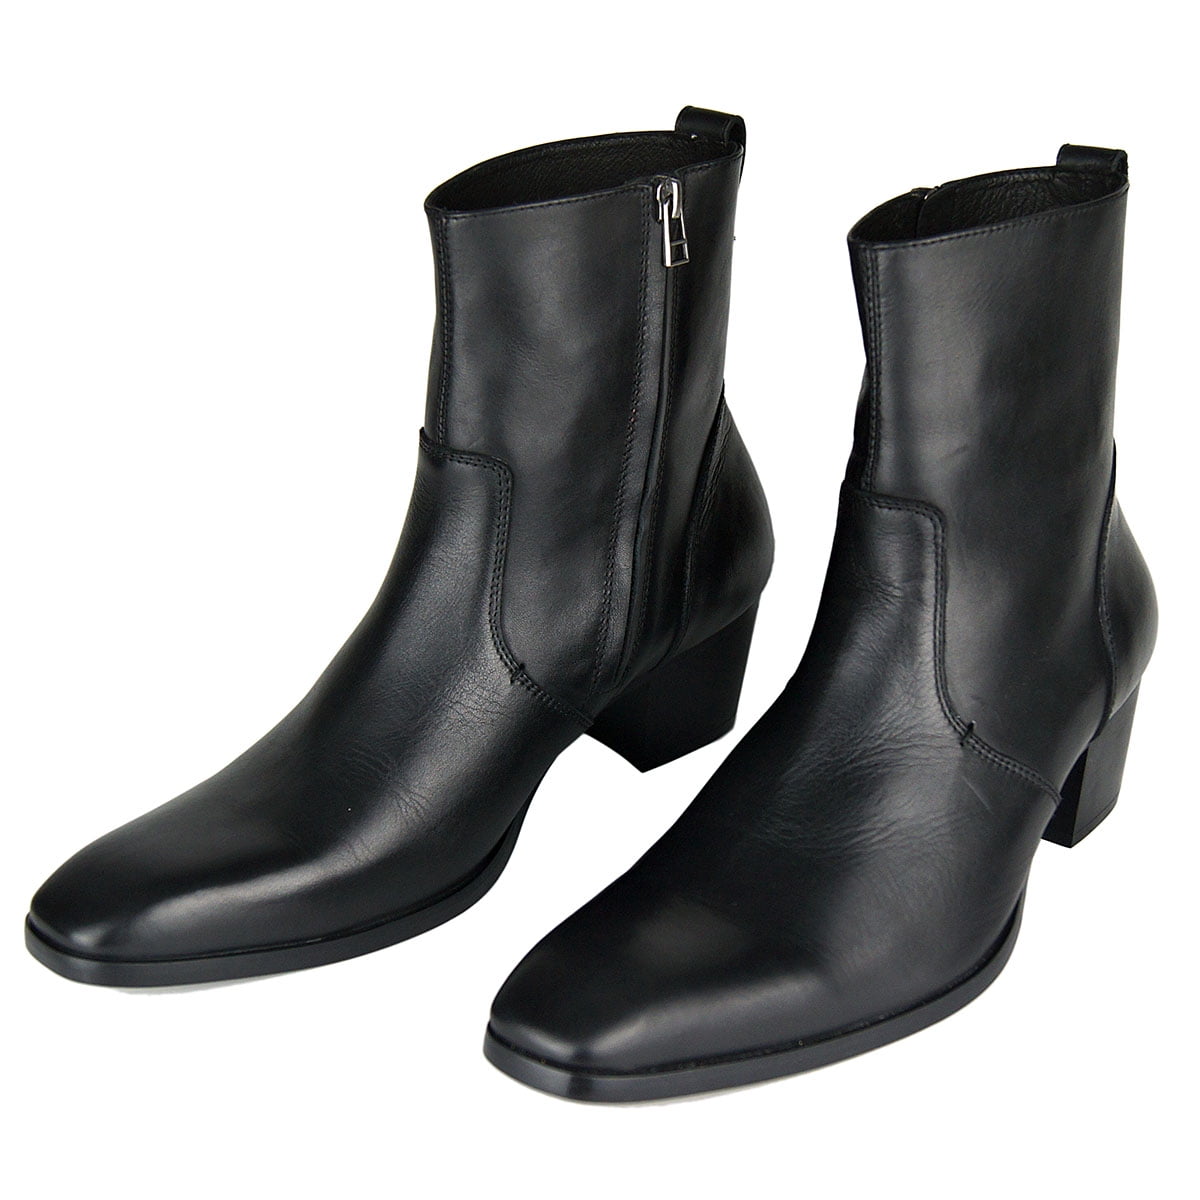 Dress Boots Chelsea Designer for Men Zipper-up Leather Casual Heel Shoes JY002-Black-9.5 - Walmart.com